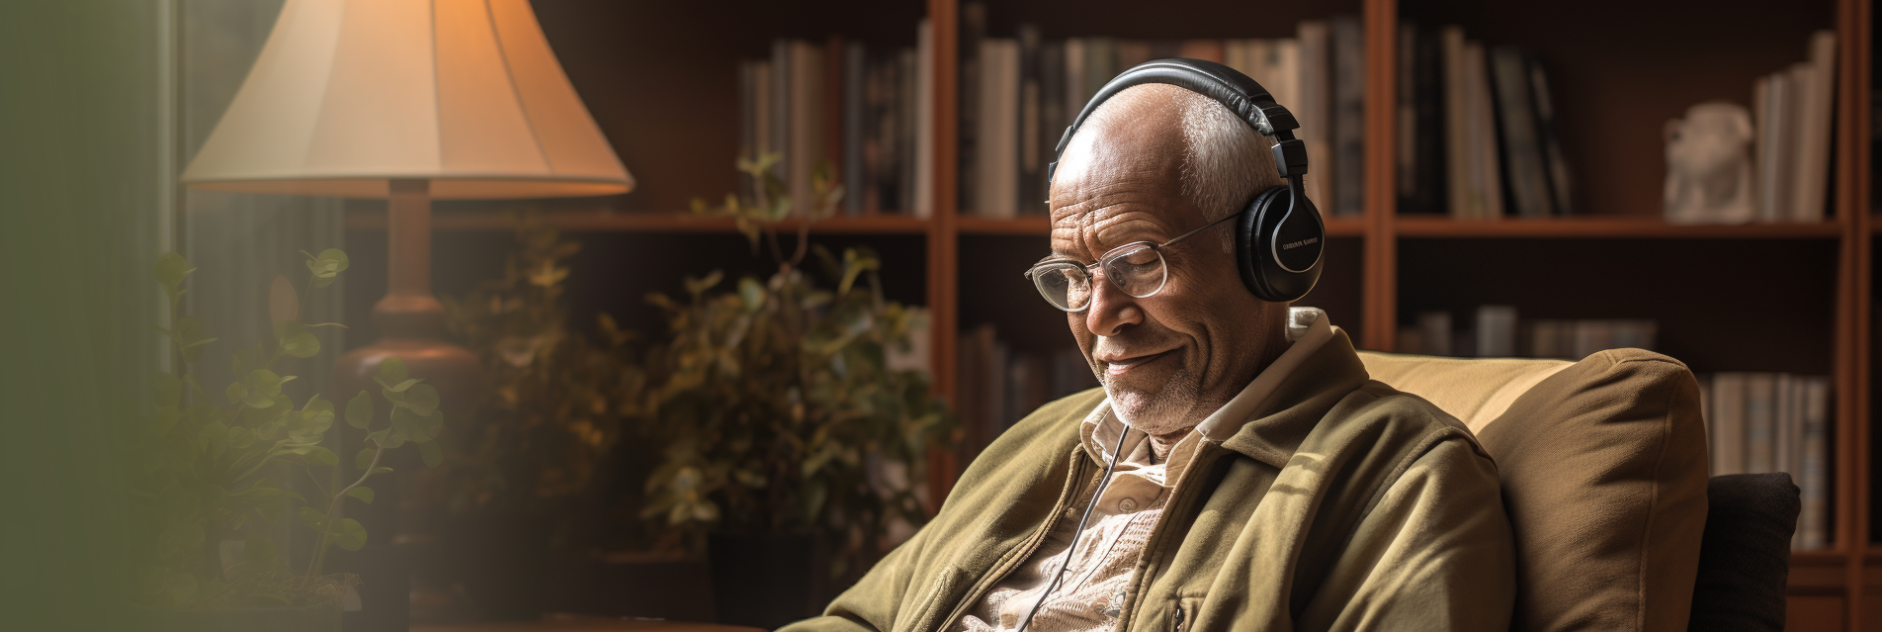 The best wireless headphones for seniors